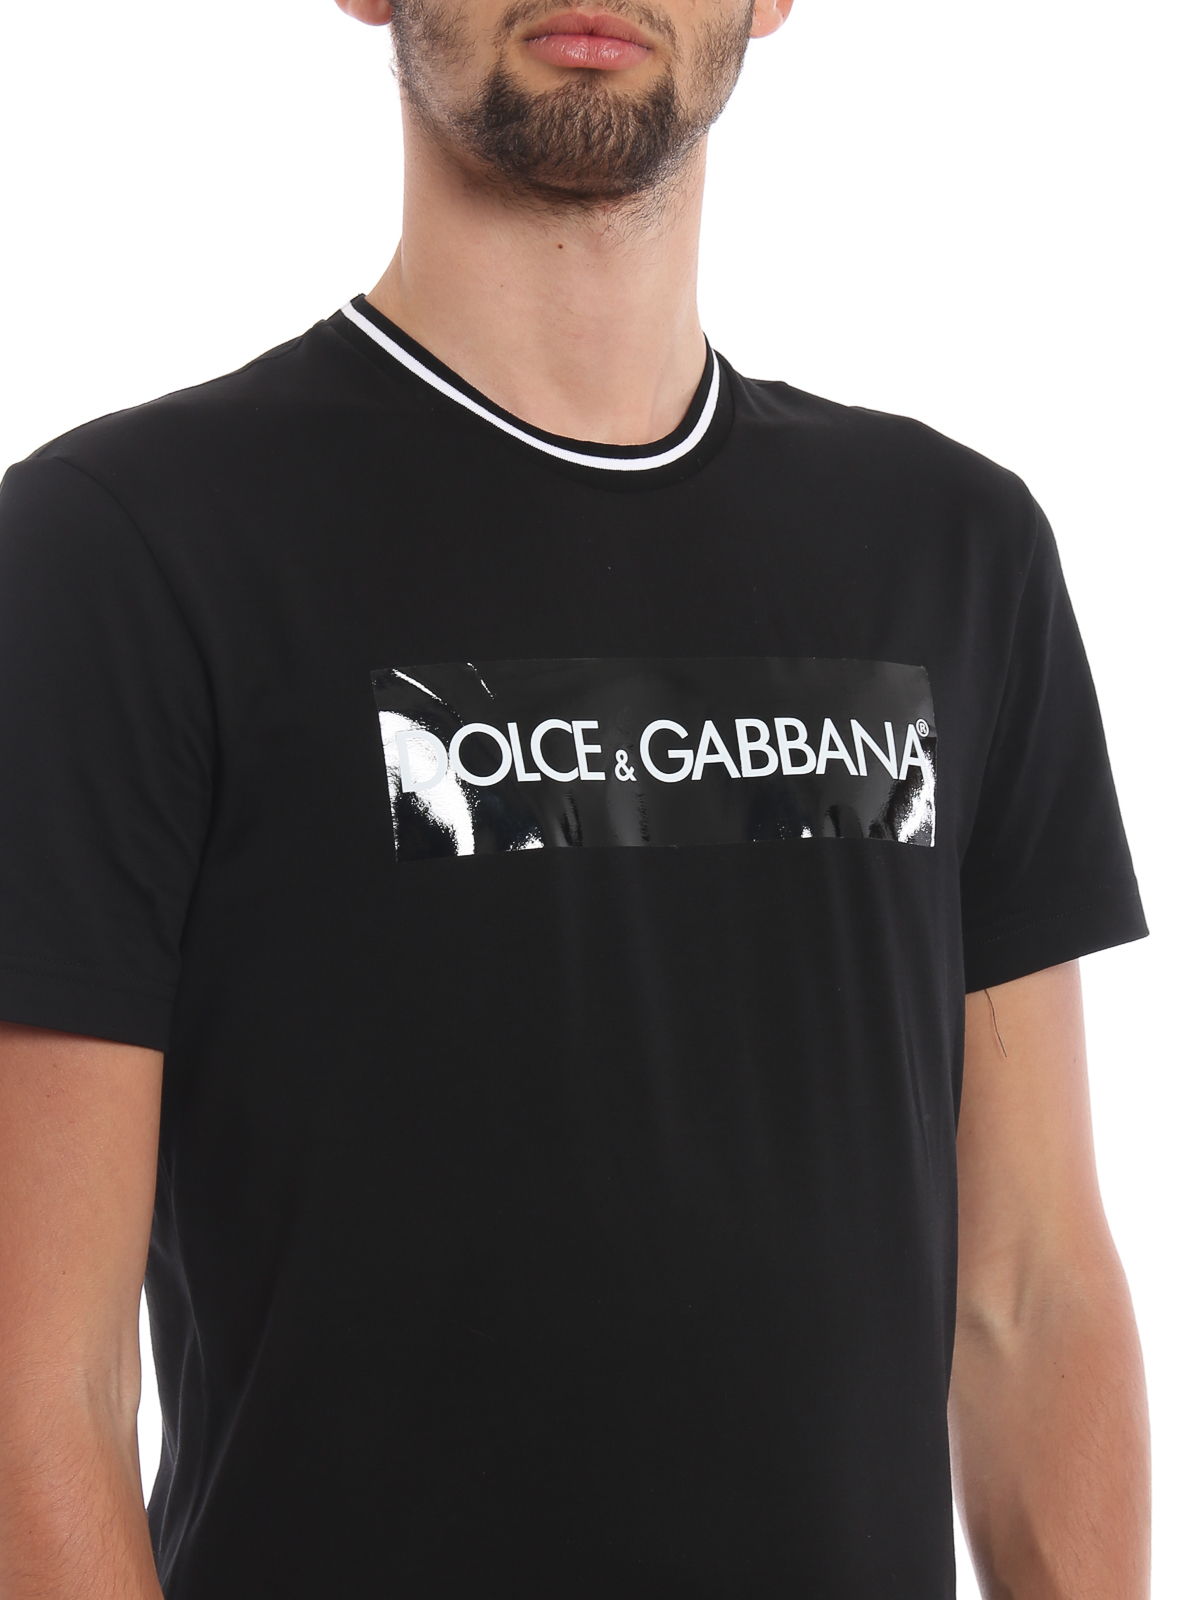 Dolce & Gabbana - Glossy logo black T-shirt - G8KD0TFU7EQN0000